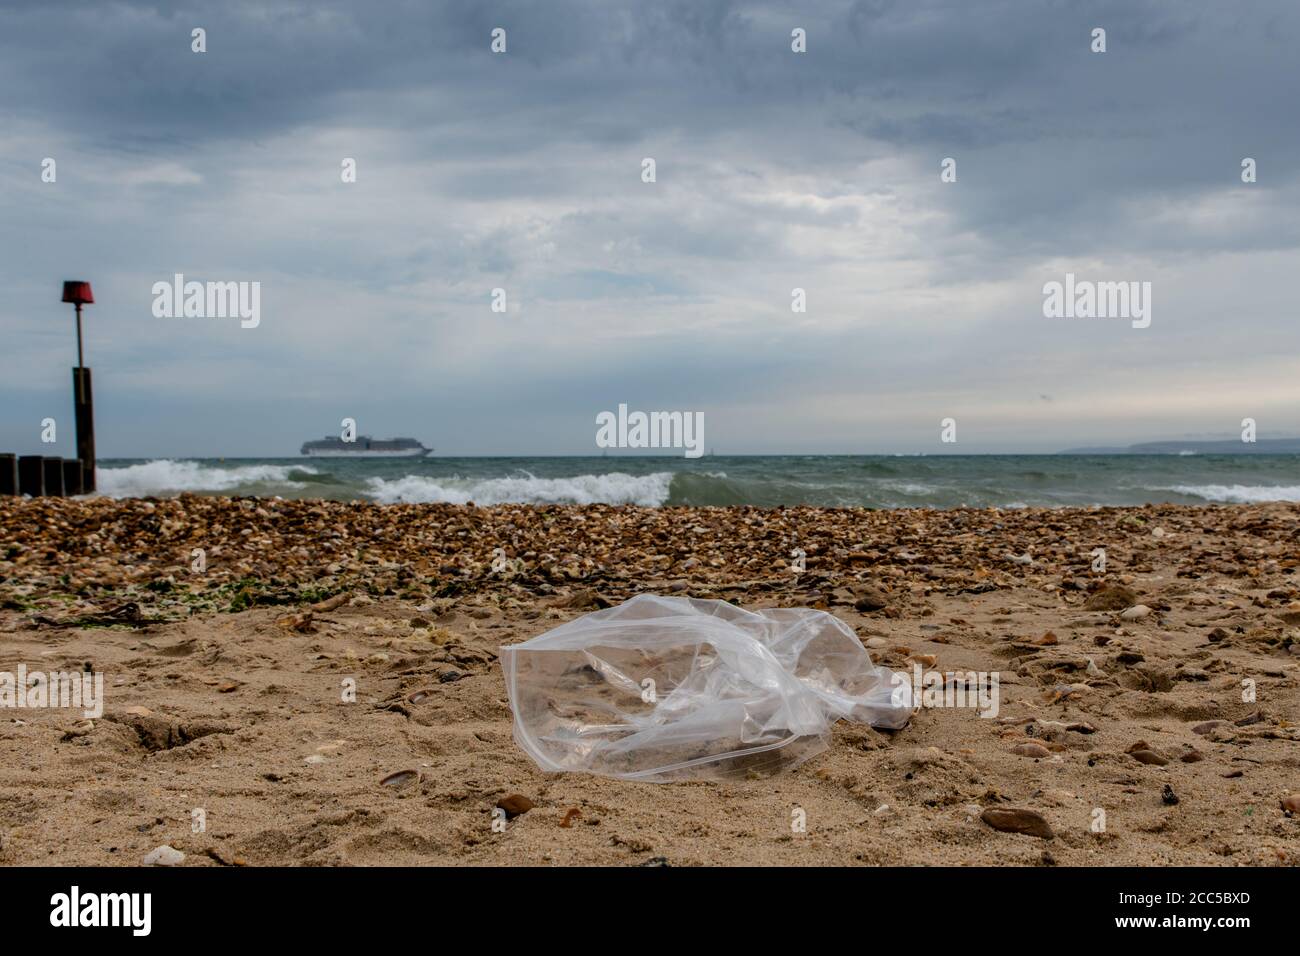 https://c8.alamy.com/comp/2CC5BXD/plastic-pollution-plastic-waste-left-by-tourists-on-the-beach-bournemouth-uk-2CC5BXD.jpg